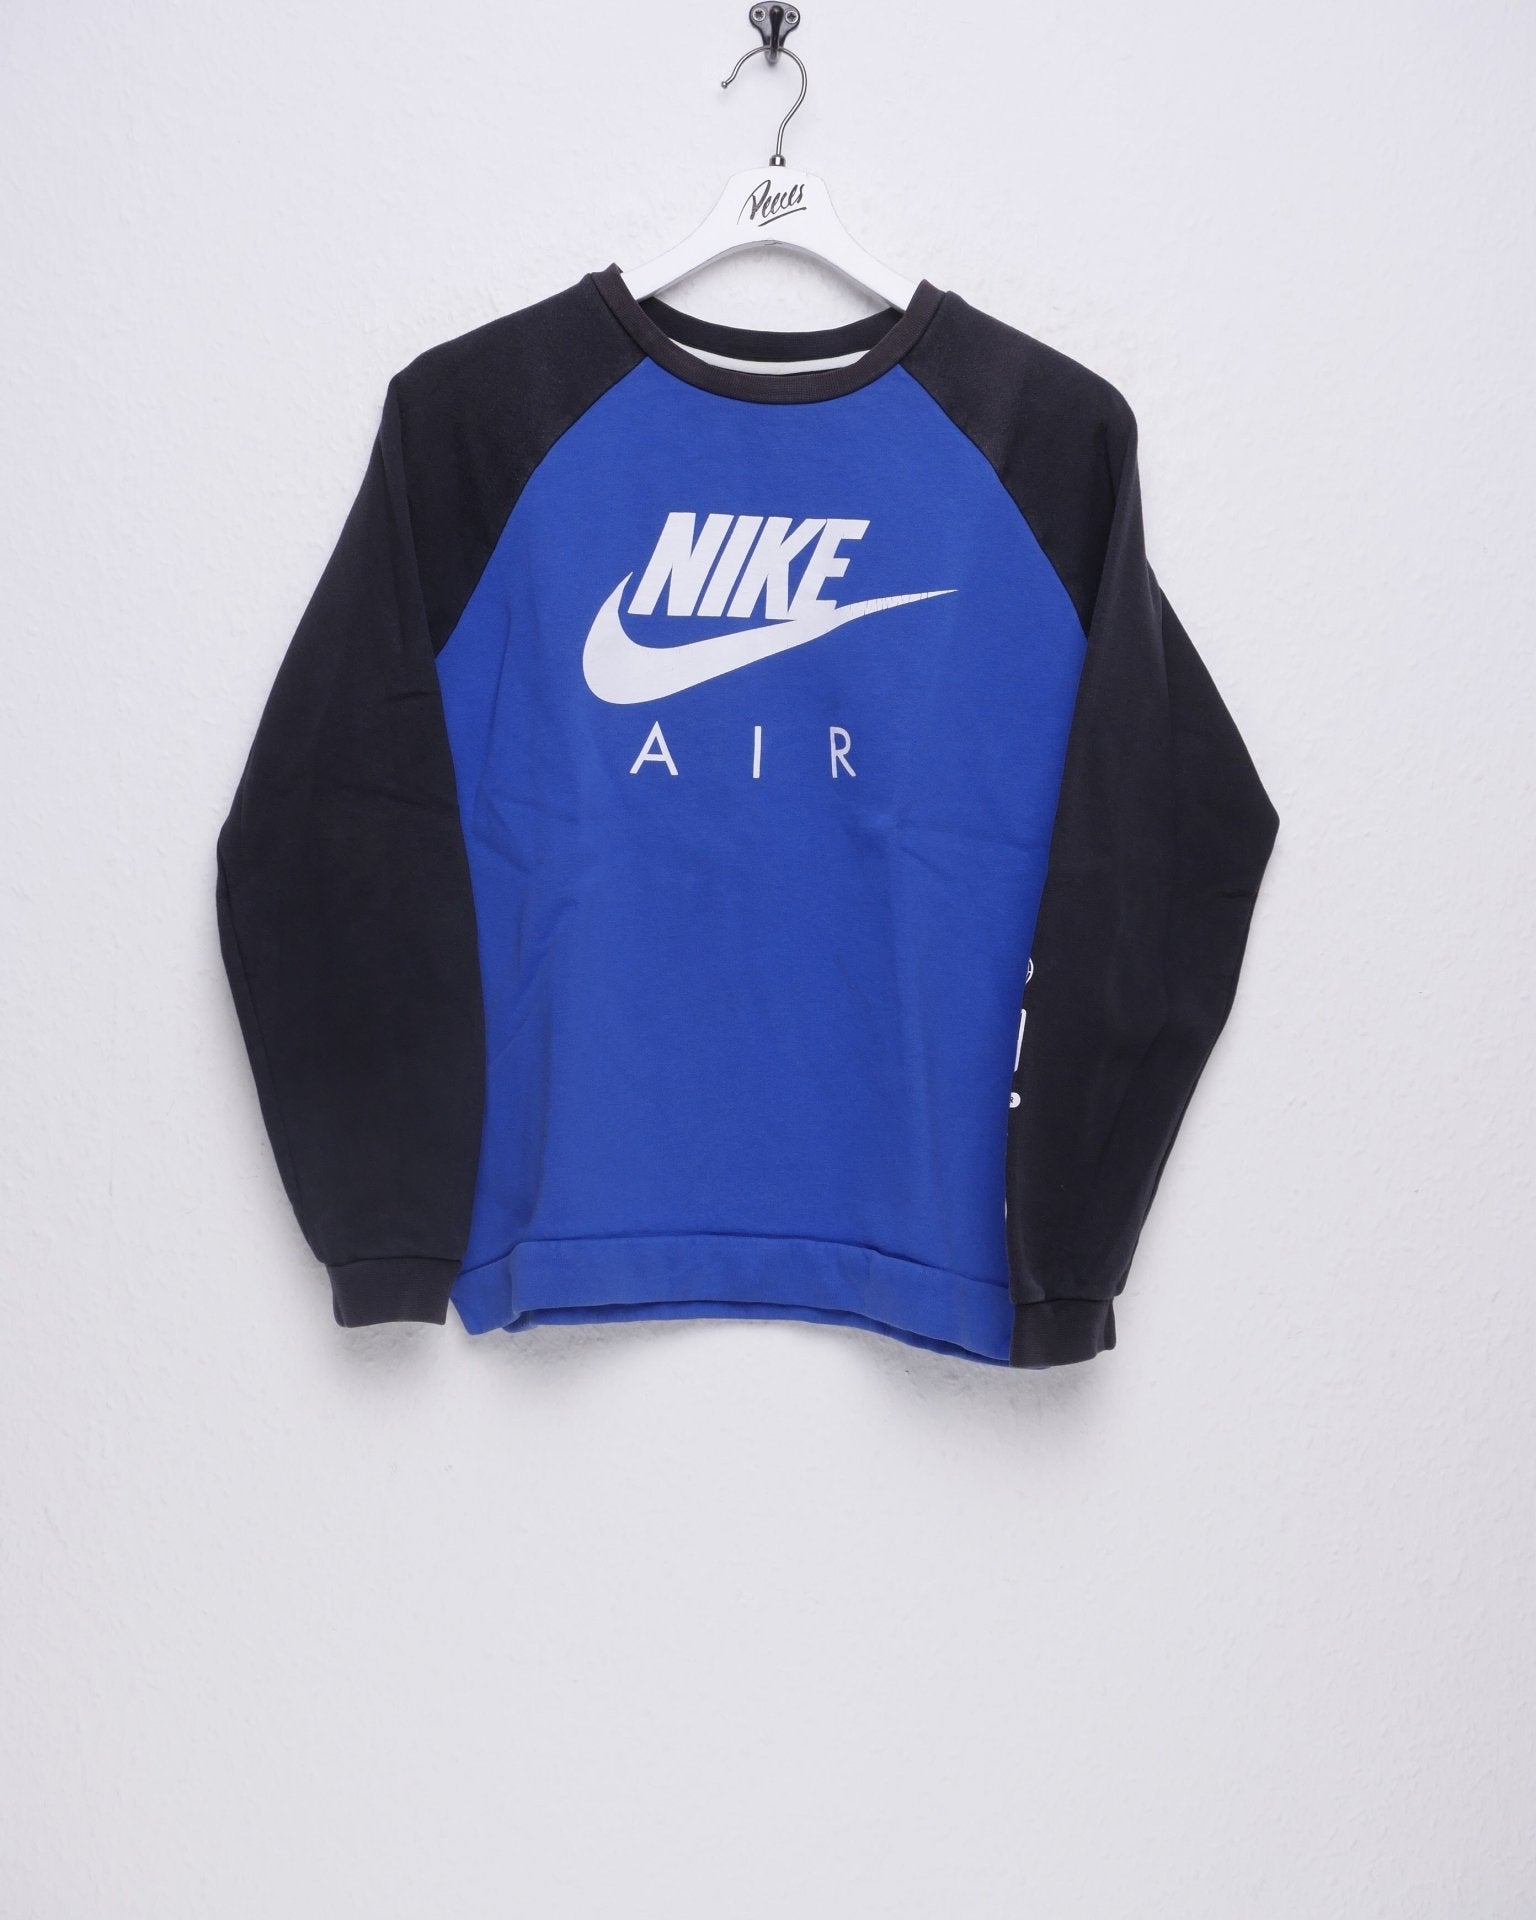 Nike Air printed Logo two toned Sweater - Peeces